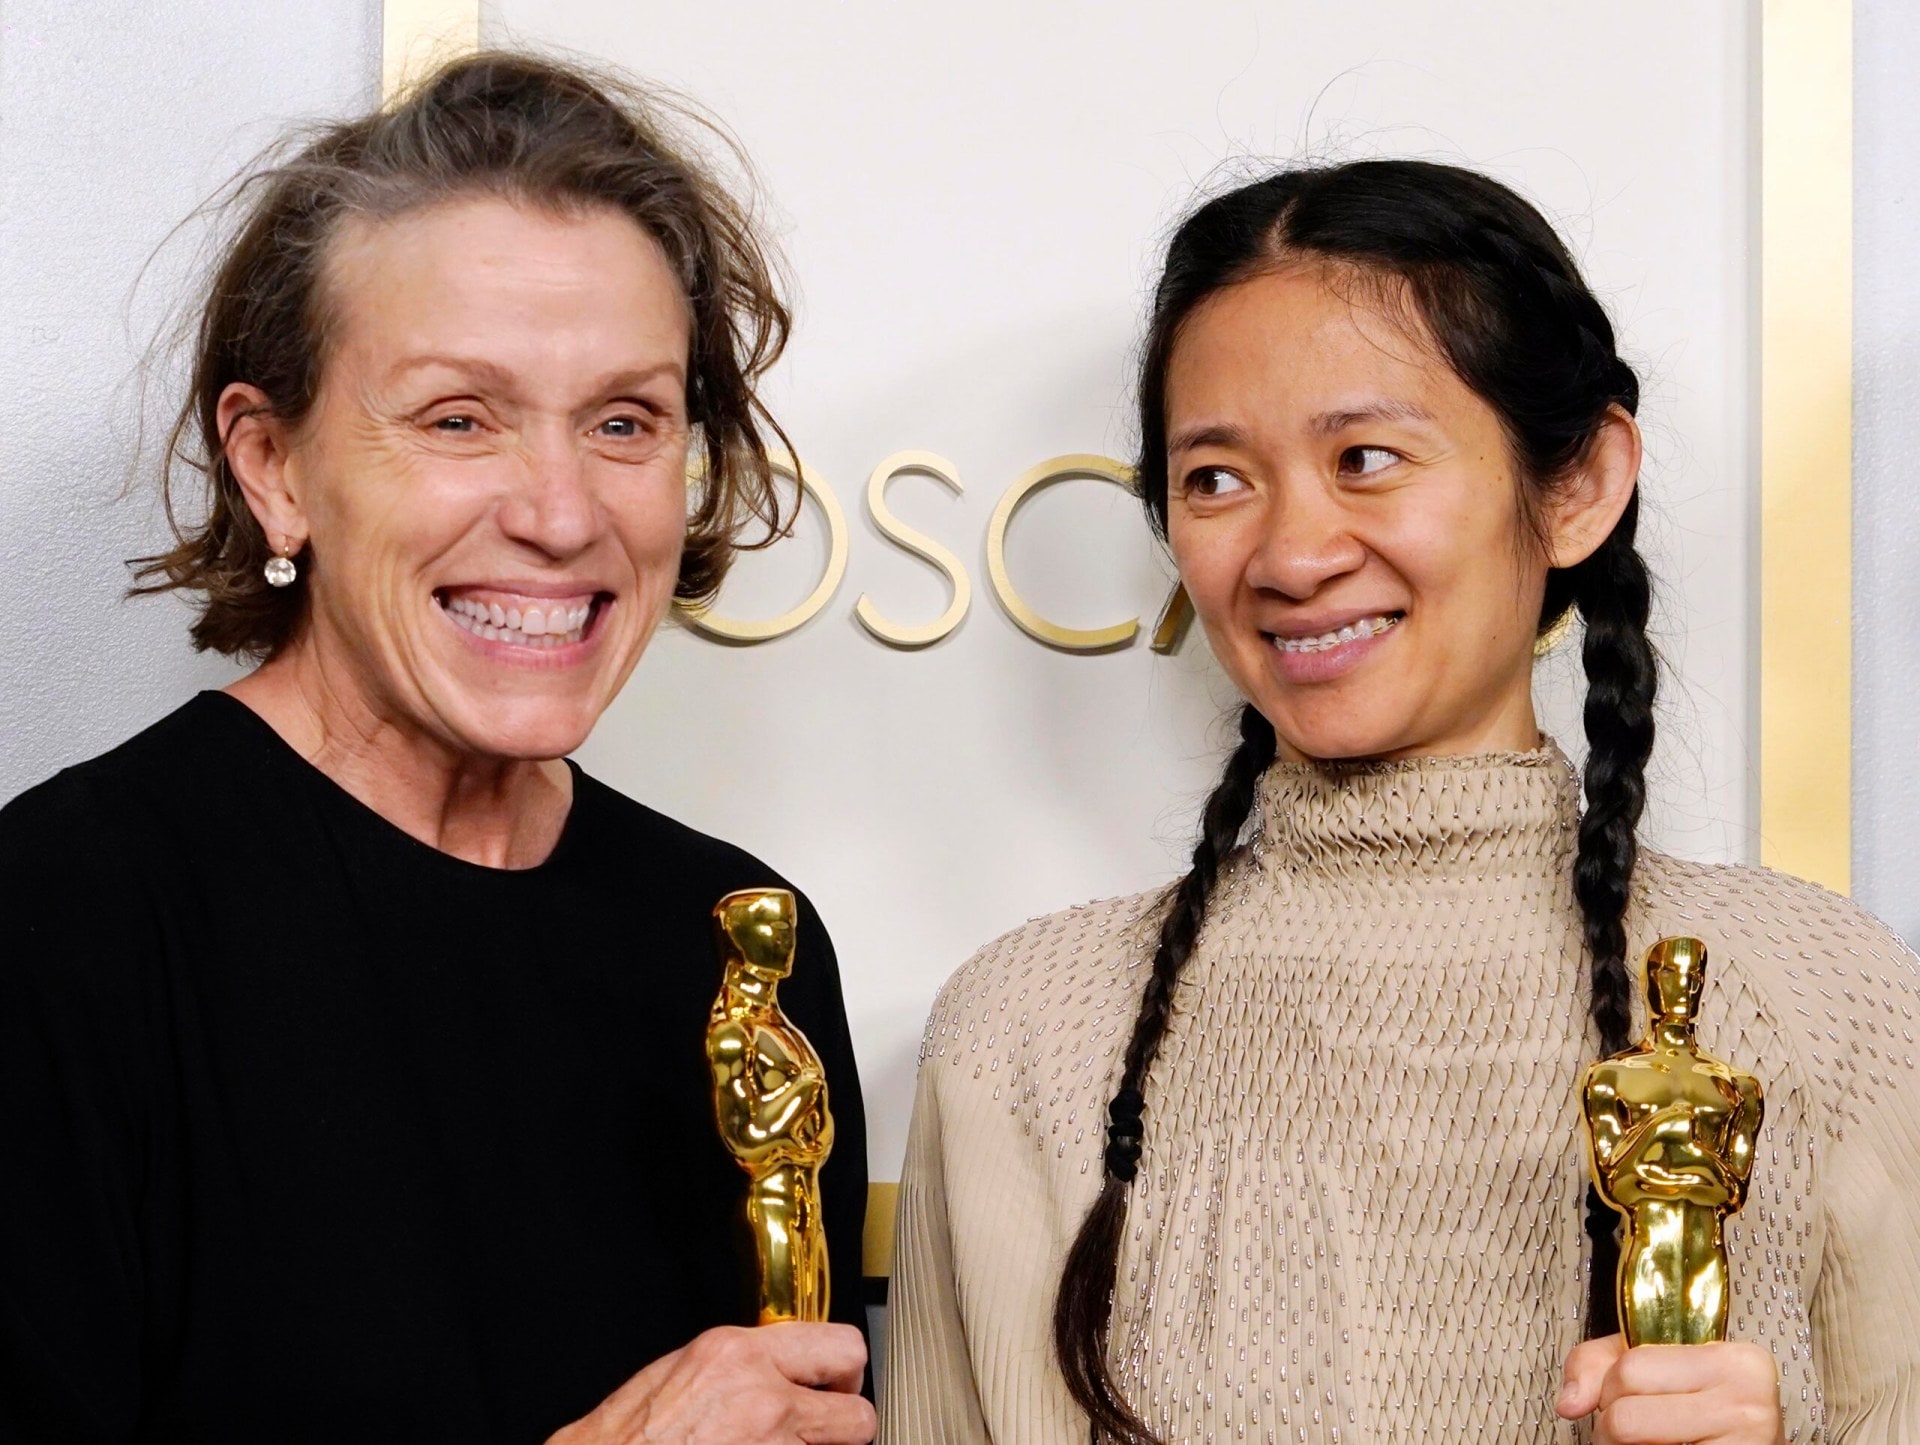 Frances McDormand and Chloé Zhao holding Oscars at the Oscars Ceremony